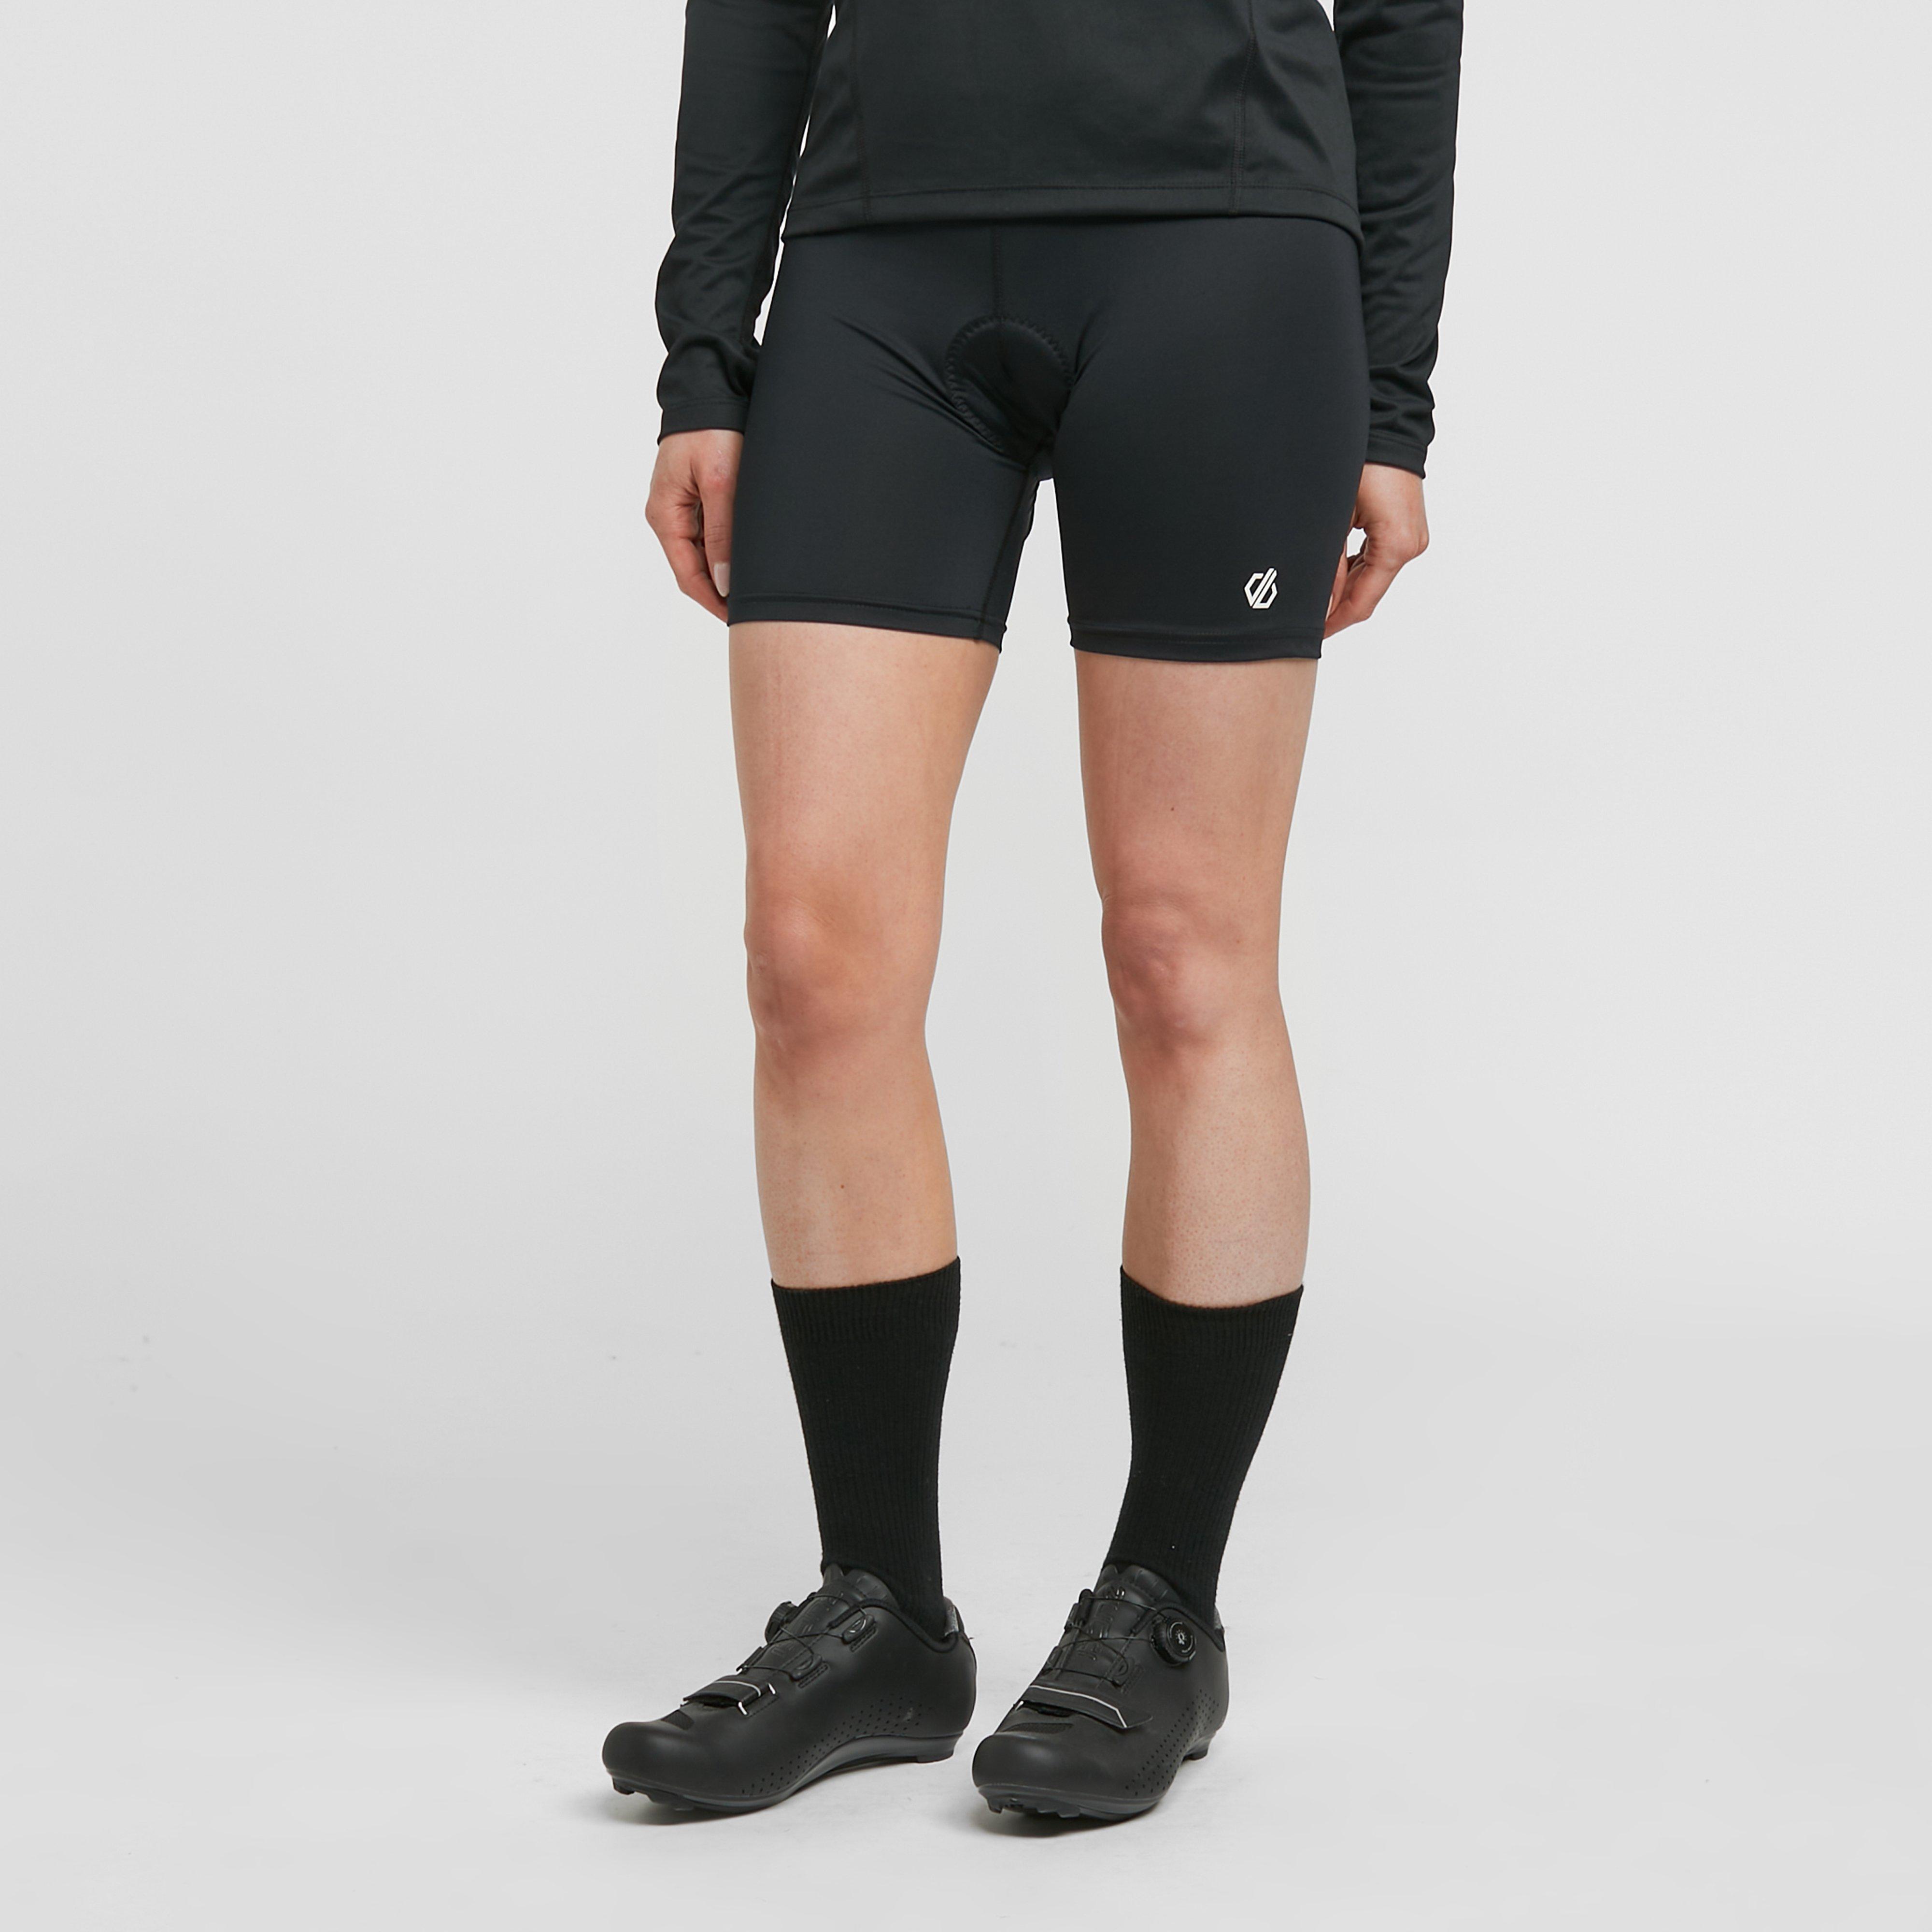 Image of Dare 2B Women's Basic Padded Cycling Shorts - Black/Blk, Black/BLK